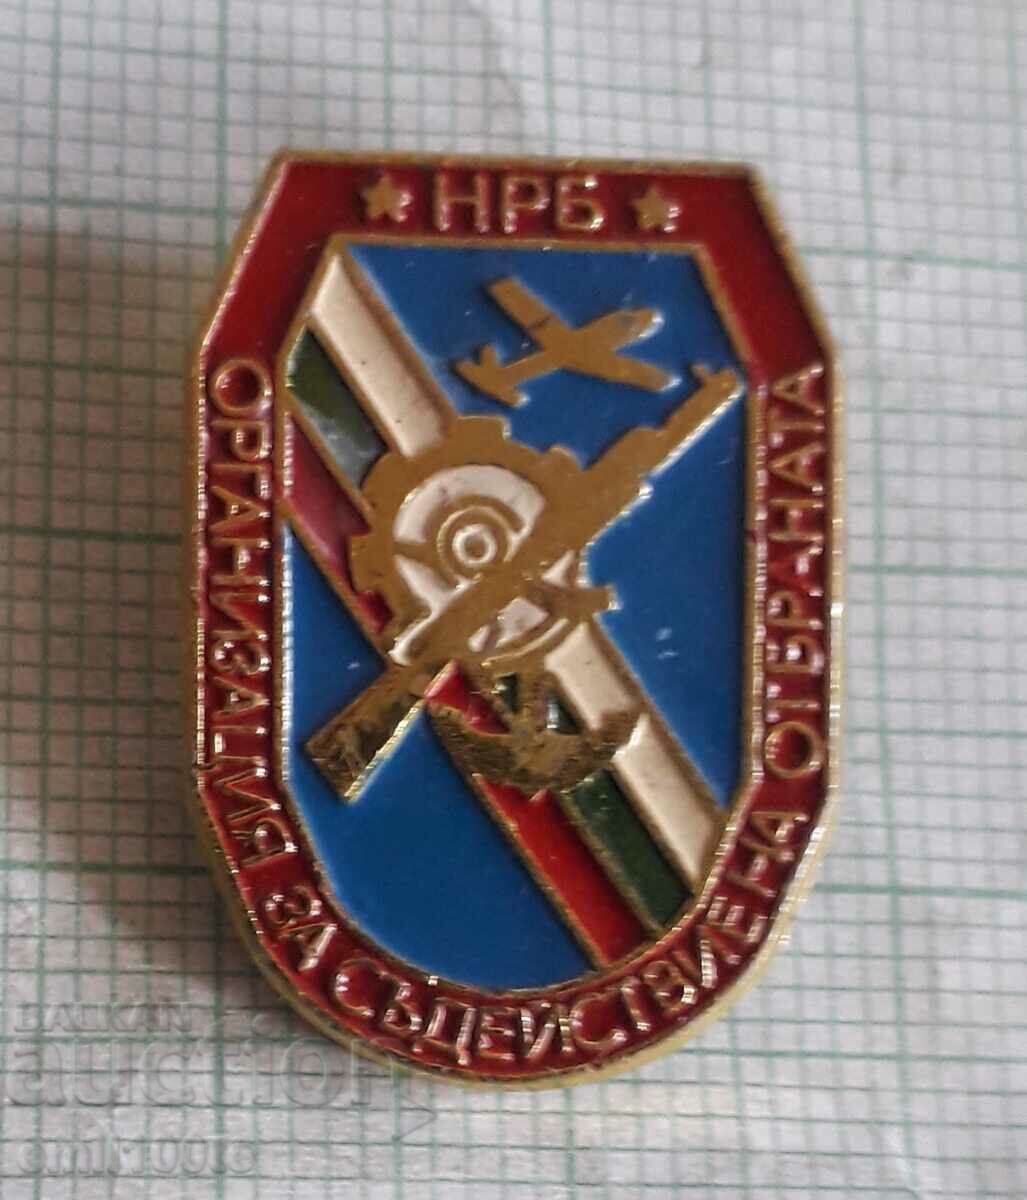 Badge - NRB OSO Defense Assistance Organization